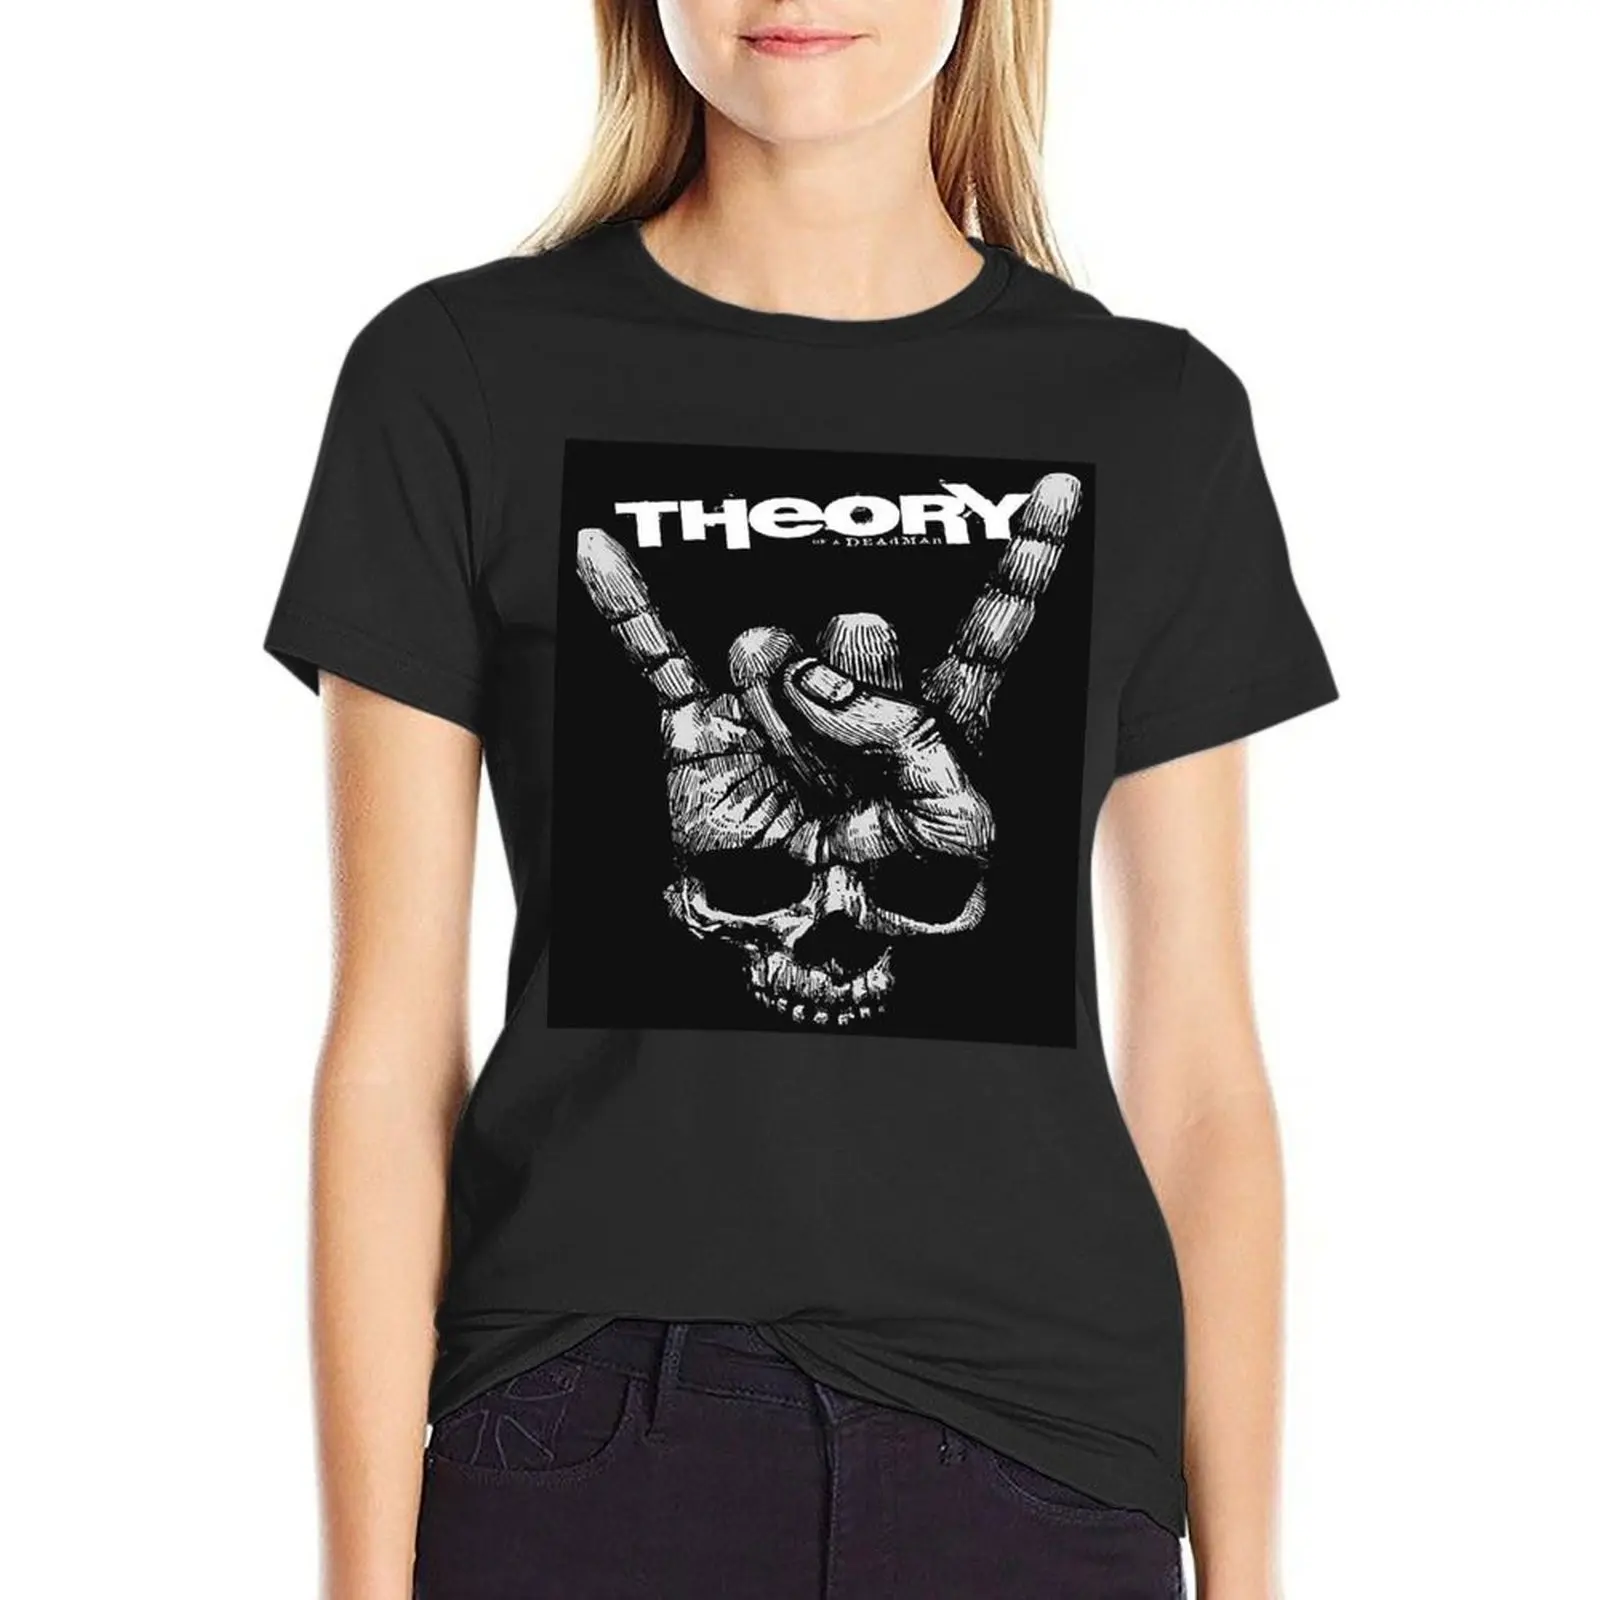 

Theory Of A Deadman T-shirt summer tops female t-shirt dress for Women plus size sexy